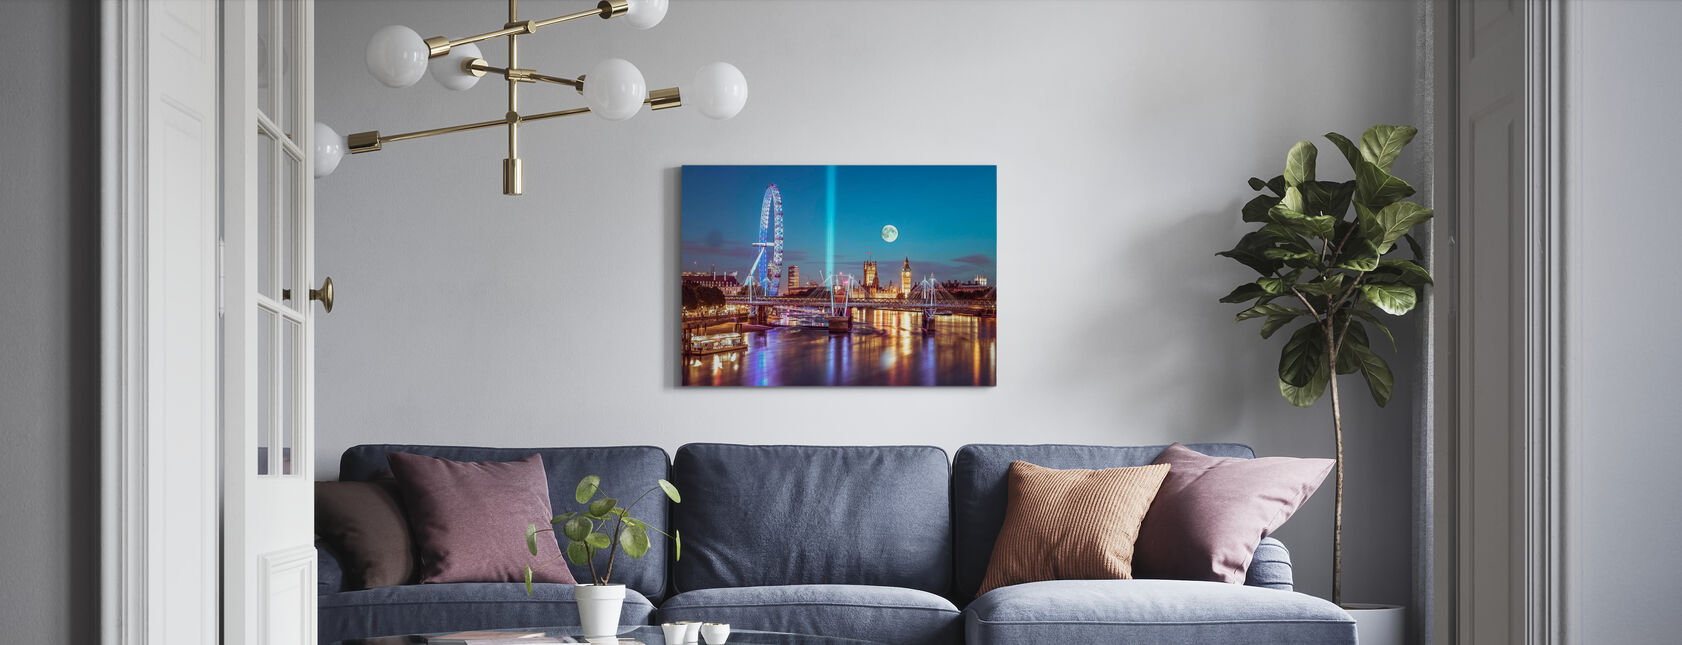 London Skyline Across the River - Canvas print - Living Room